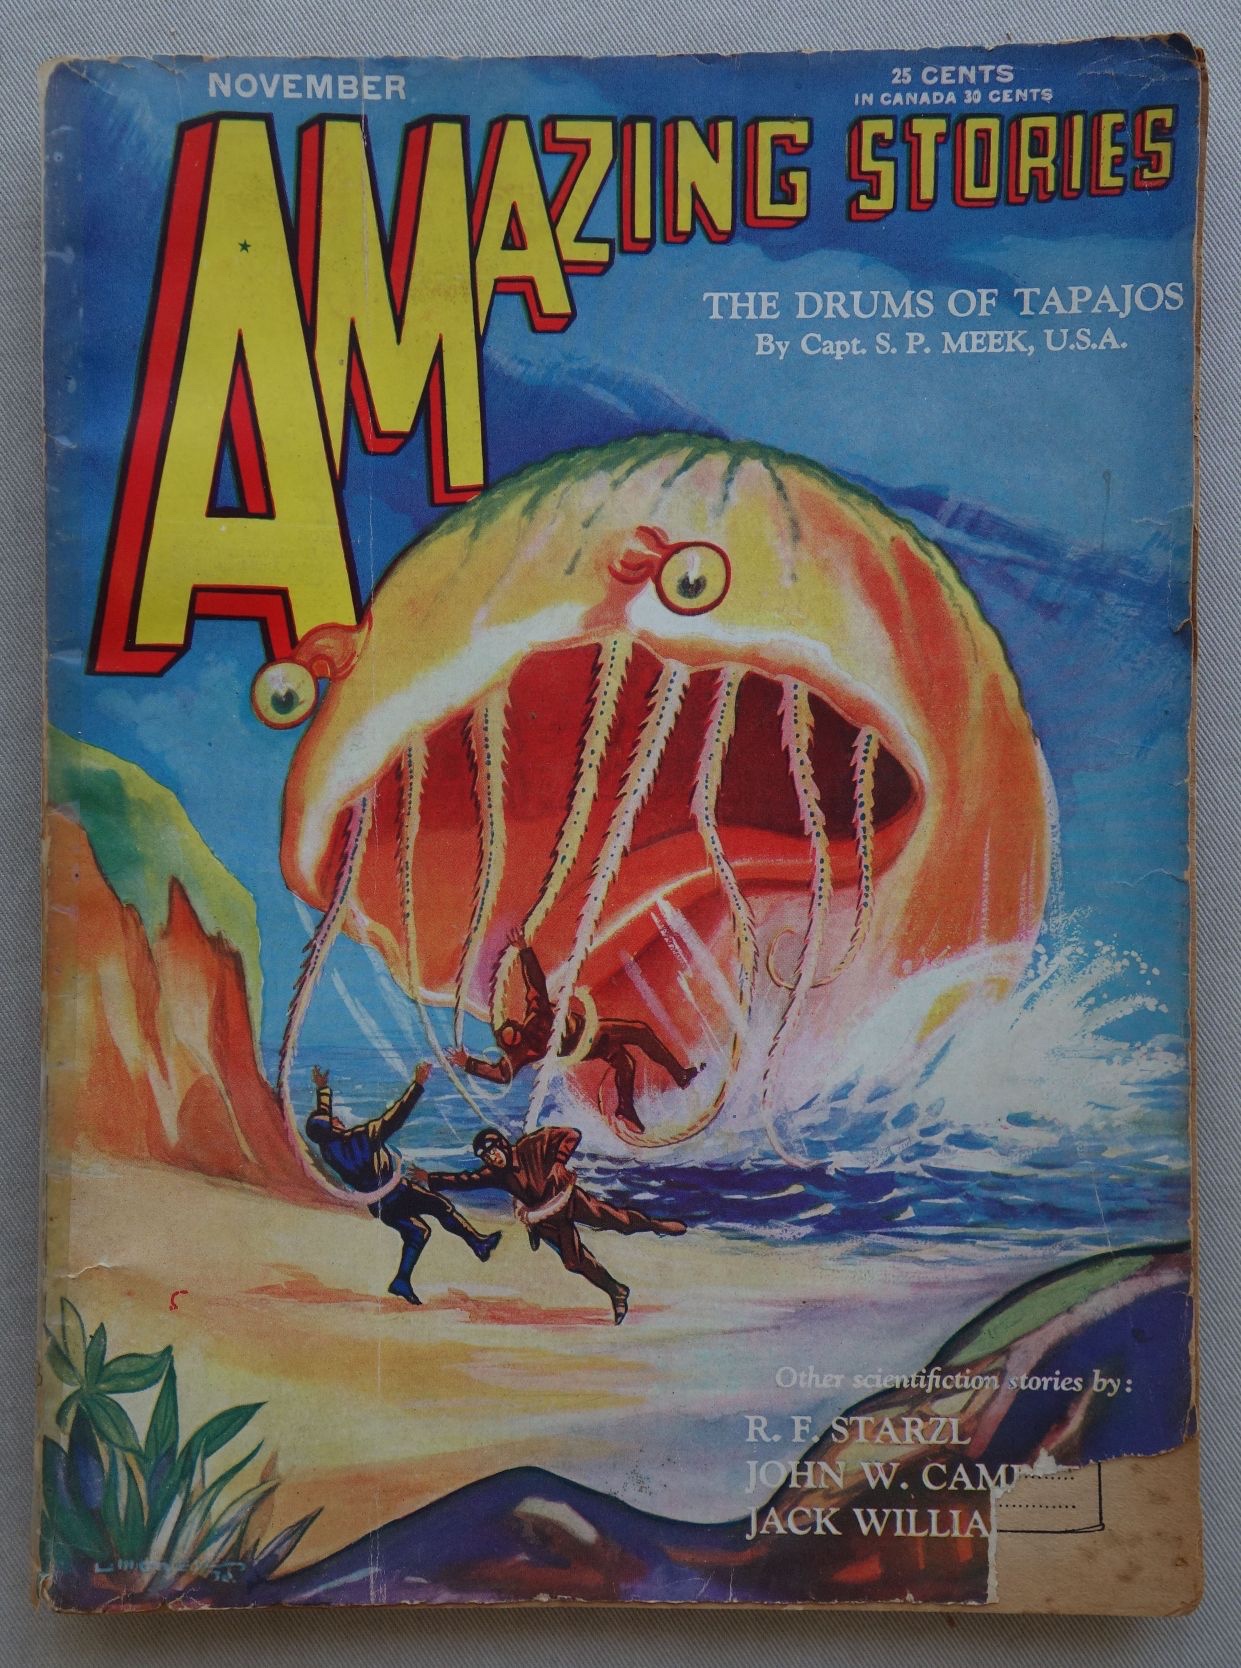 Amazing Stories Pulp Science Fiction Magazine Vol 5 #8 Nov 1930